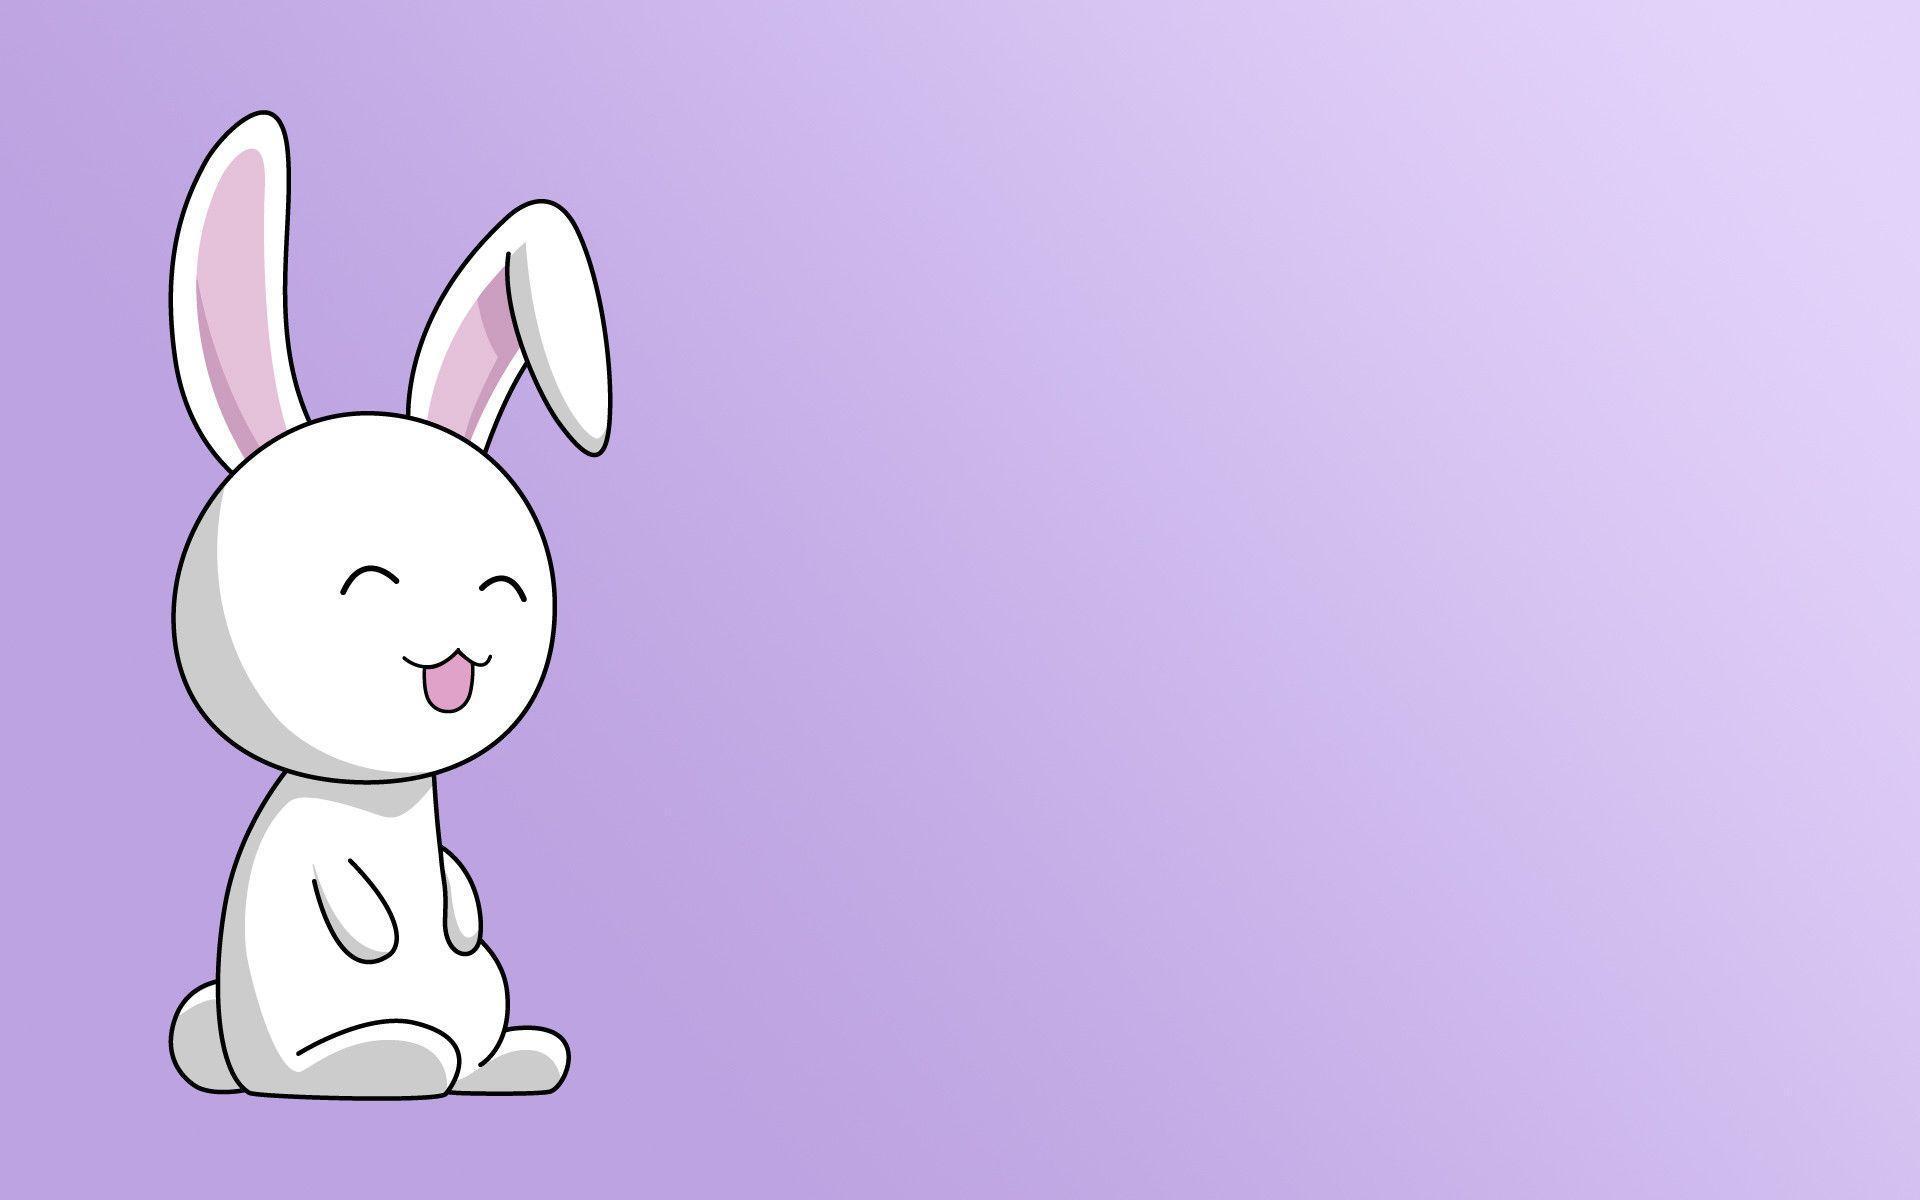 Wallpaper Cute Bunny Picture Cartoonwalpaperlist.com